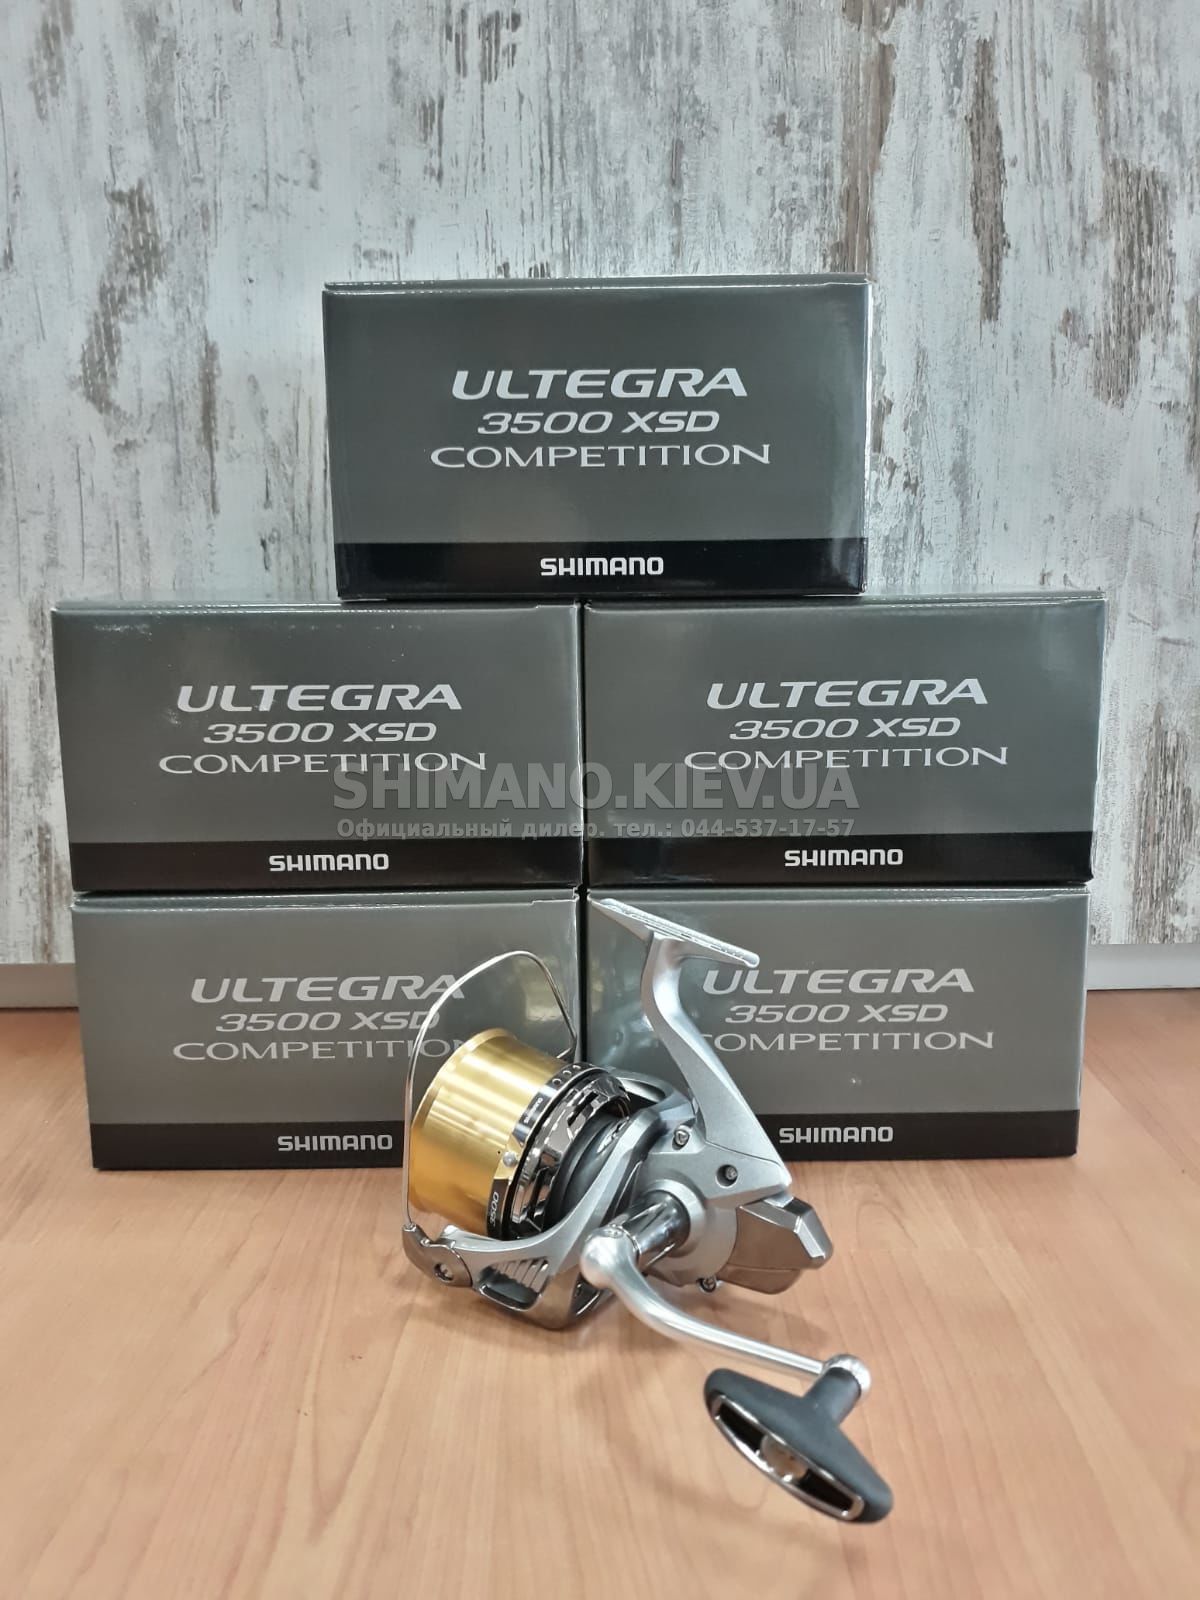 Катушка Shimano Ultegra 3500 XSD Competition - обзор, характеристики, отзывы